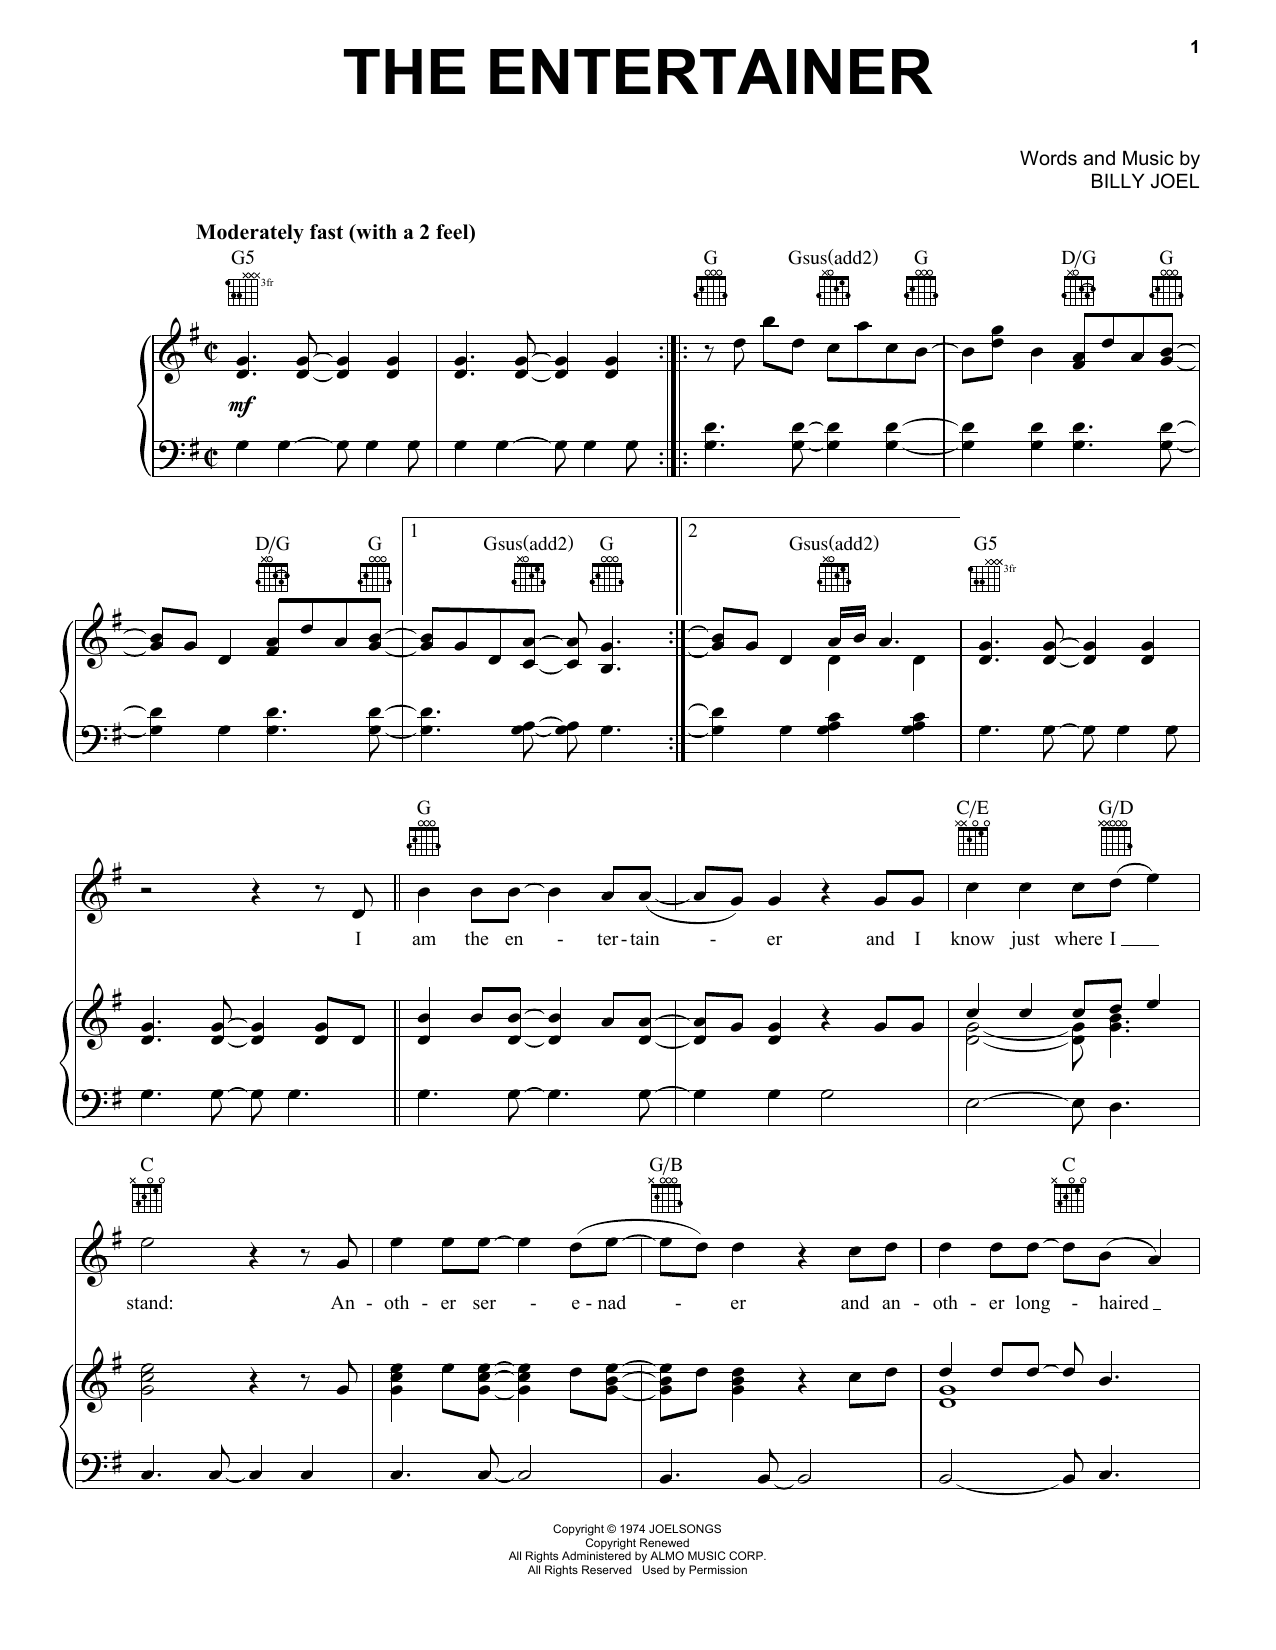 Billy Joel The Entertainer Sheet Music Notes & Chords for Ukulele - Download or Print PDF